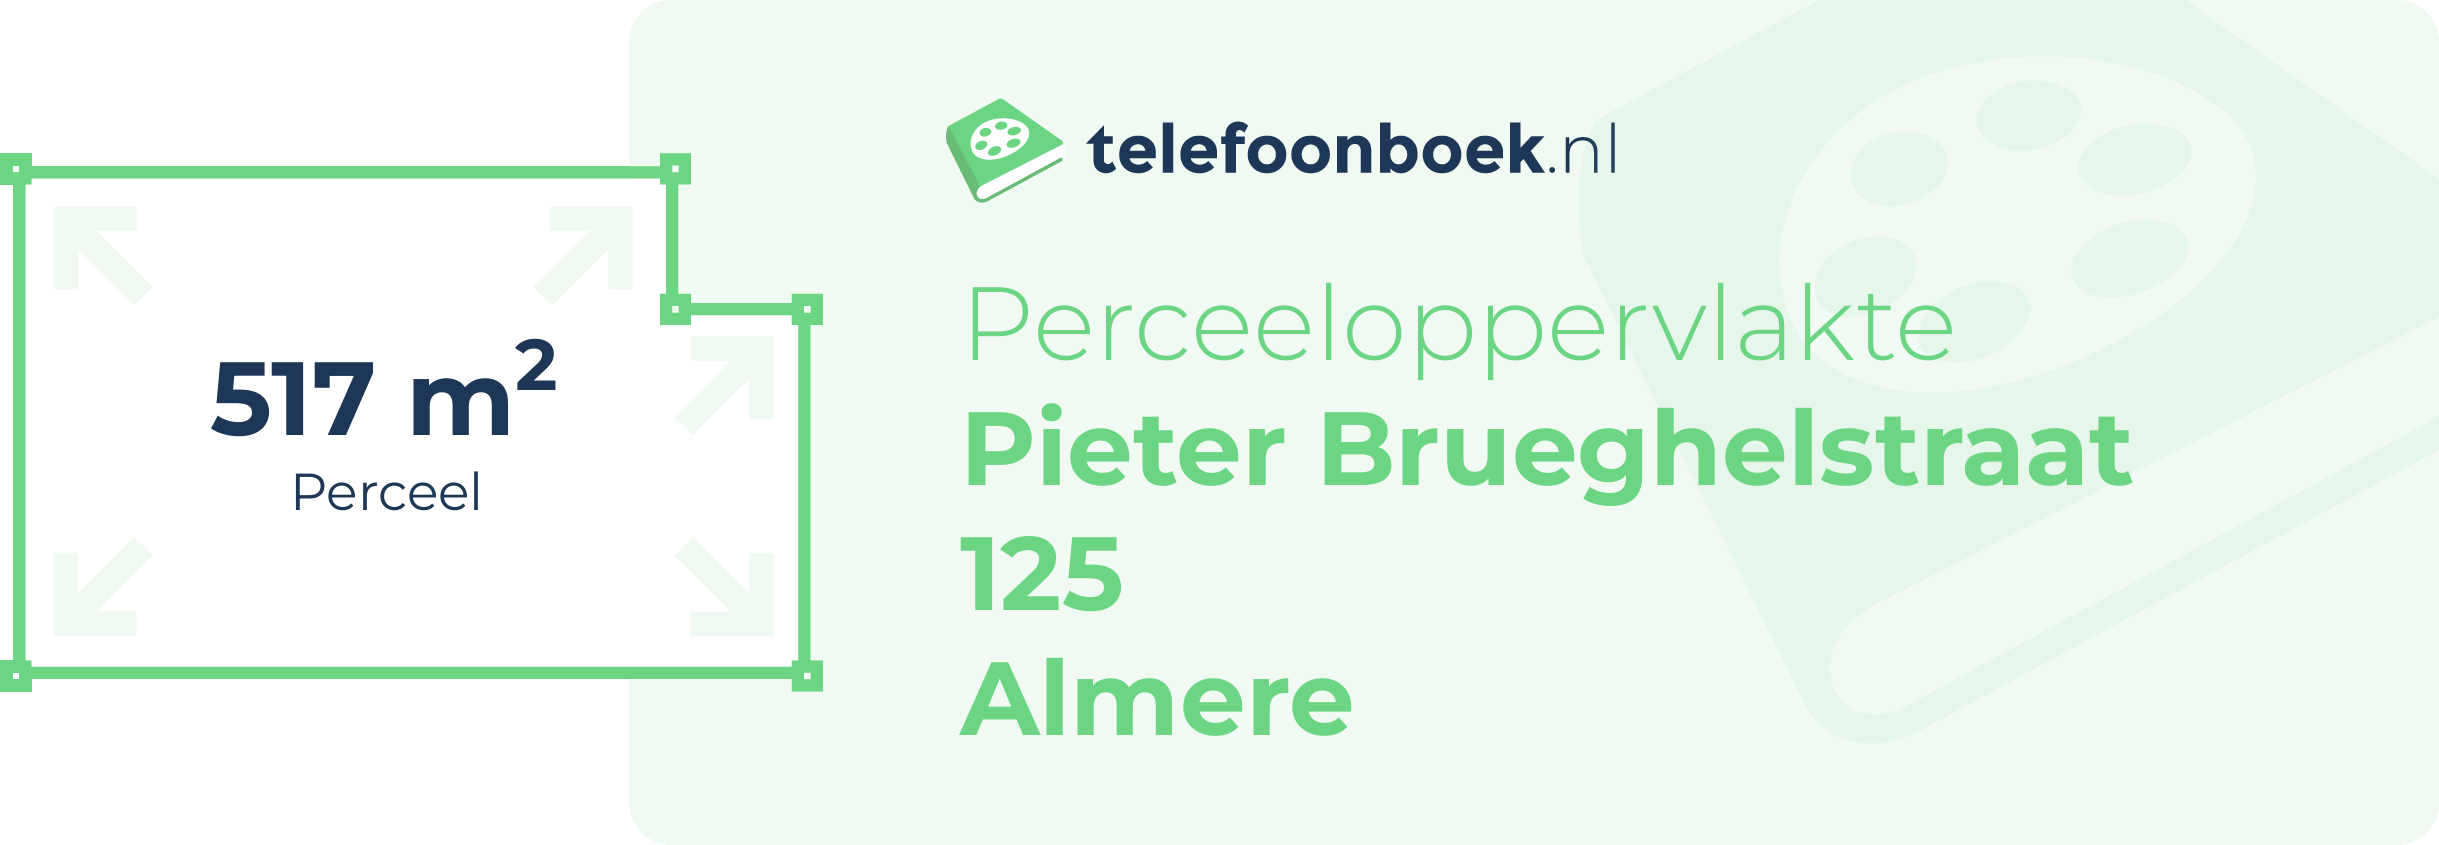 Perceeloppervlakte Pieter Brueghelstraat 125 Almere